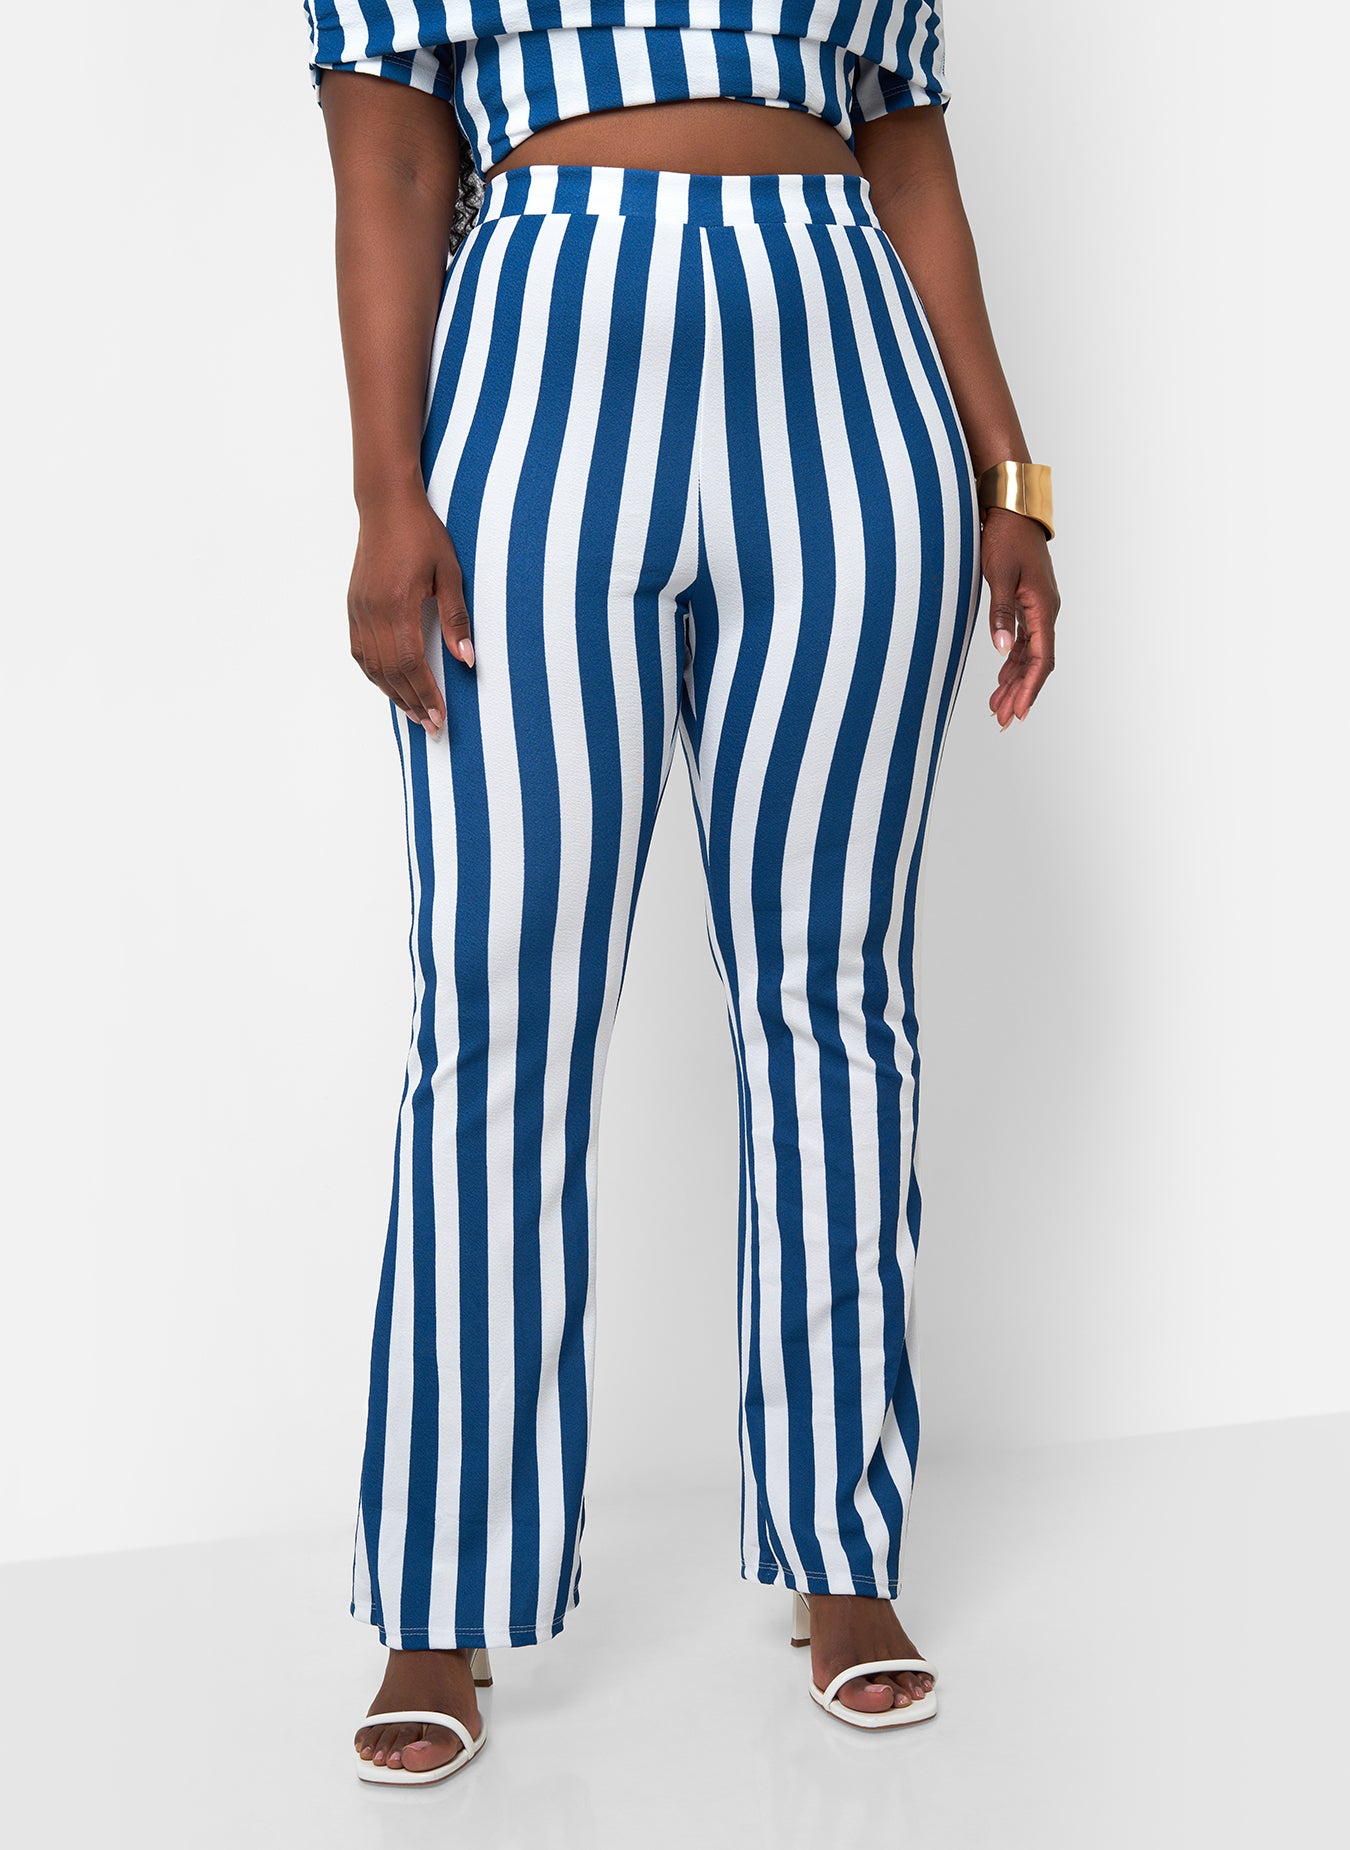 Shelly Stripe Bell Bottom Pants - White & Navy